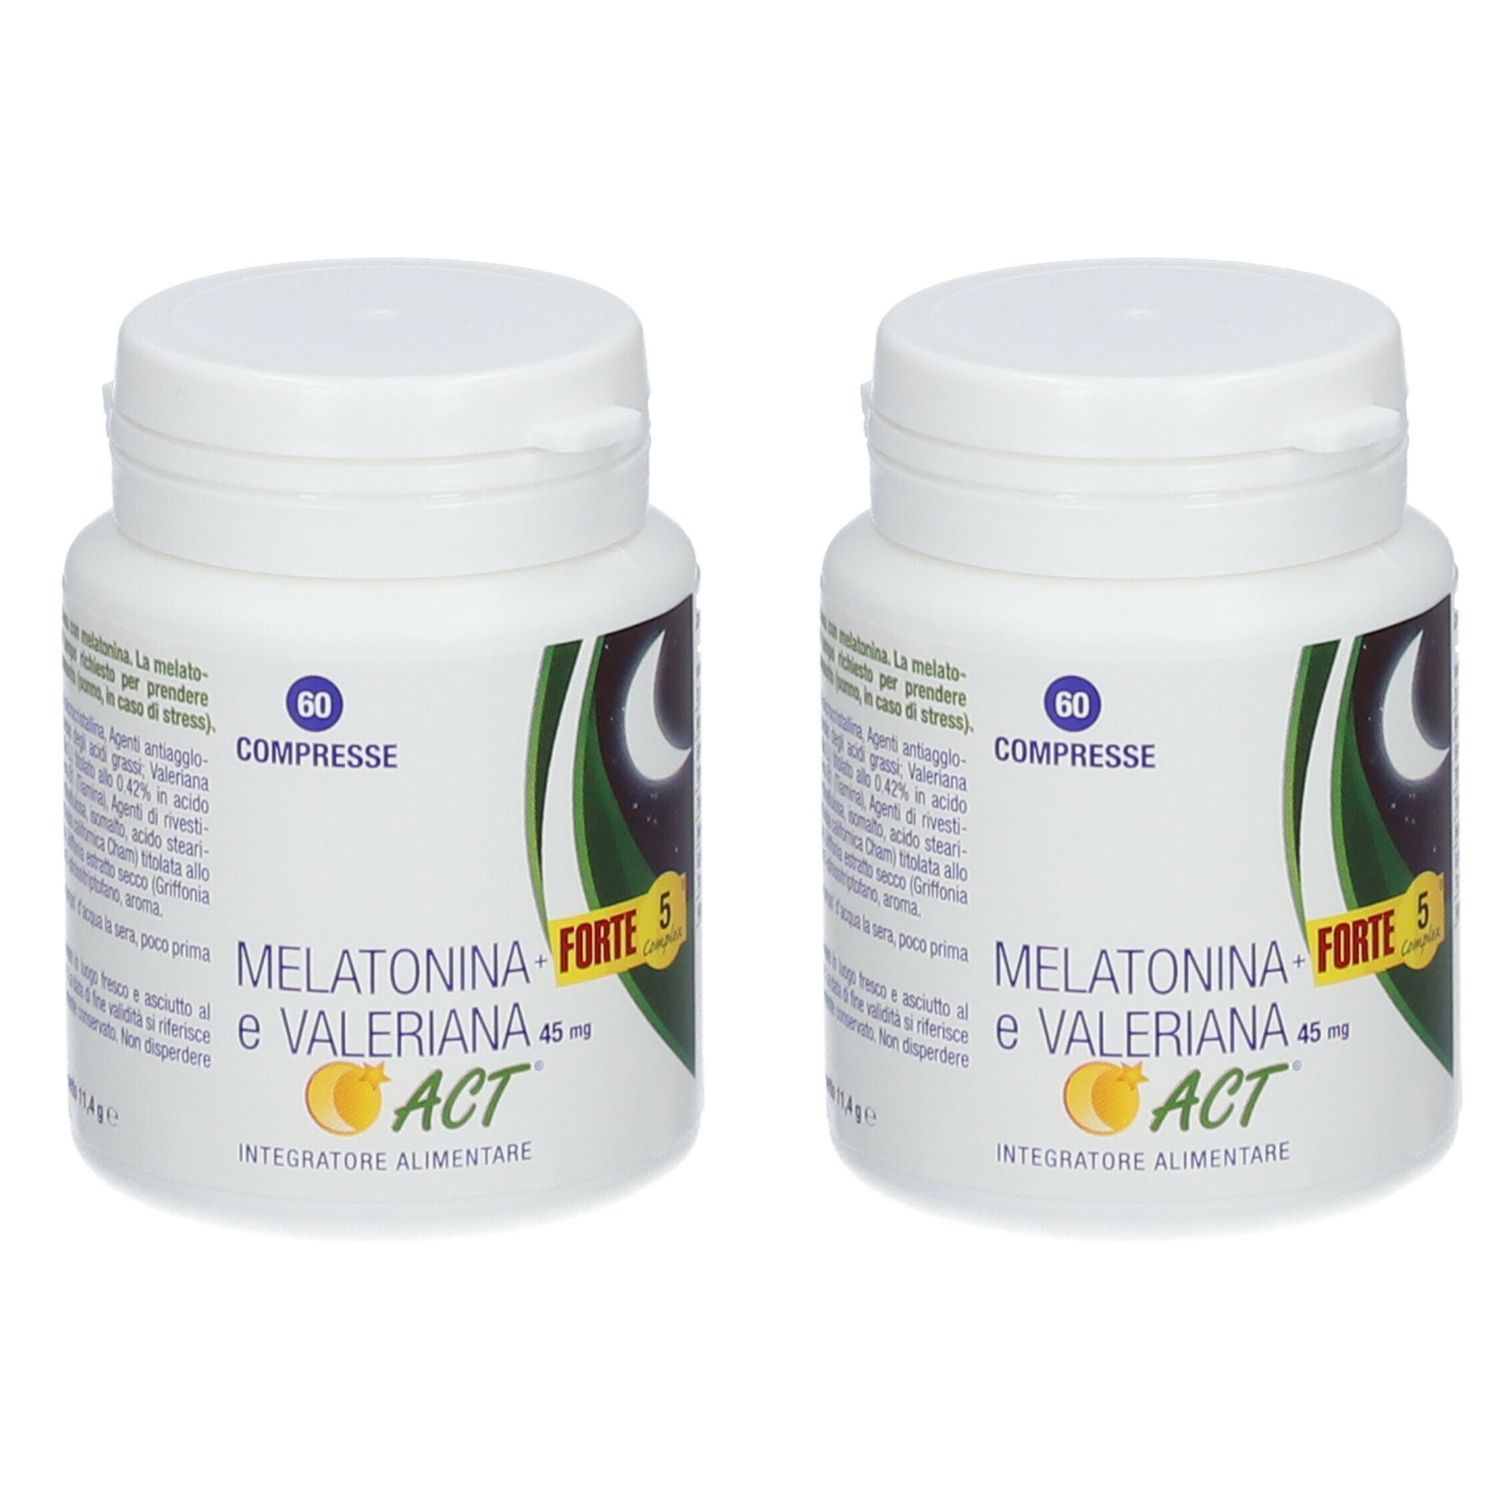 Image of Melatonina+Forte 5 Complex e Valeriana Act